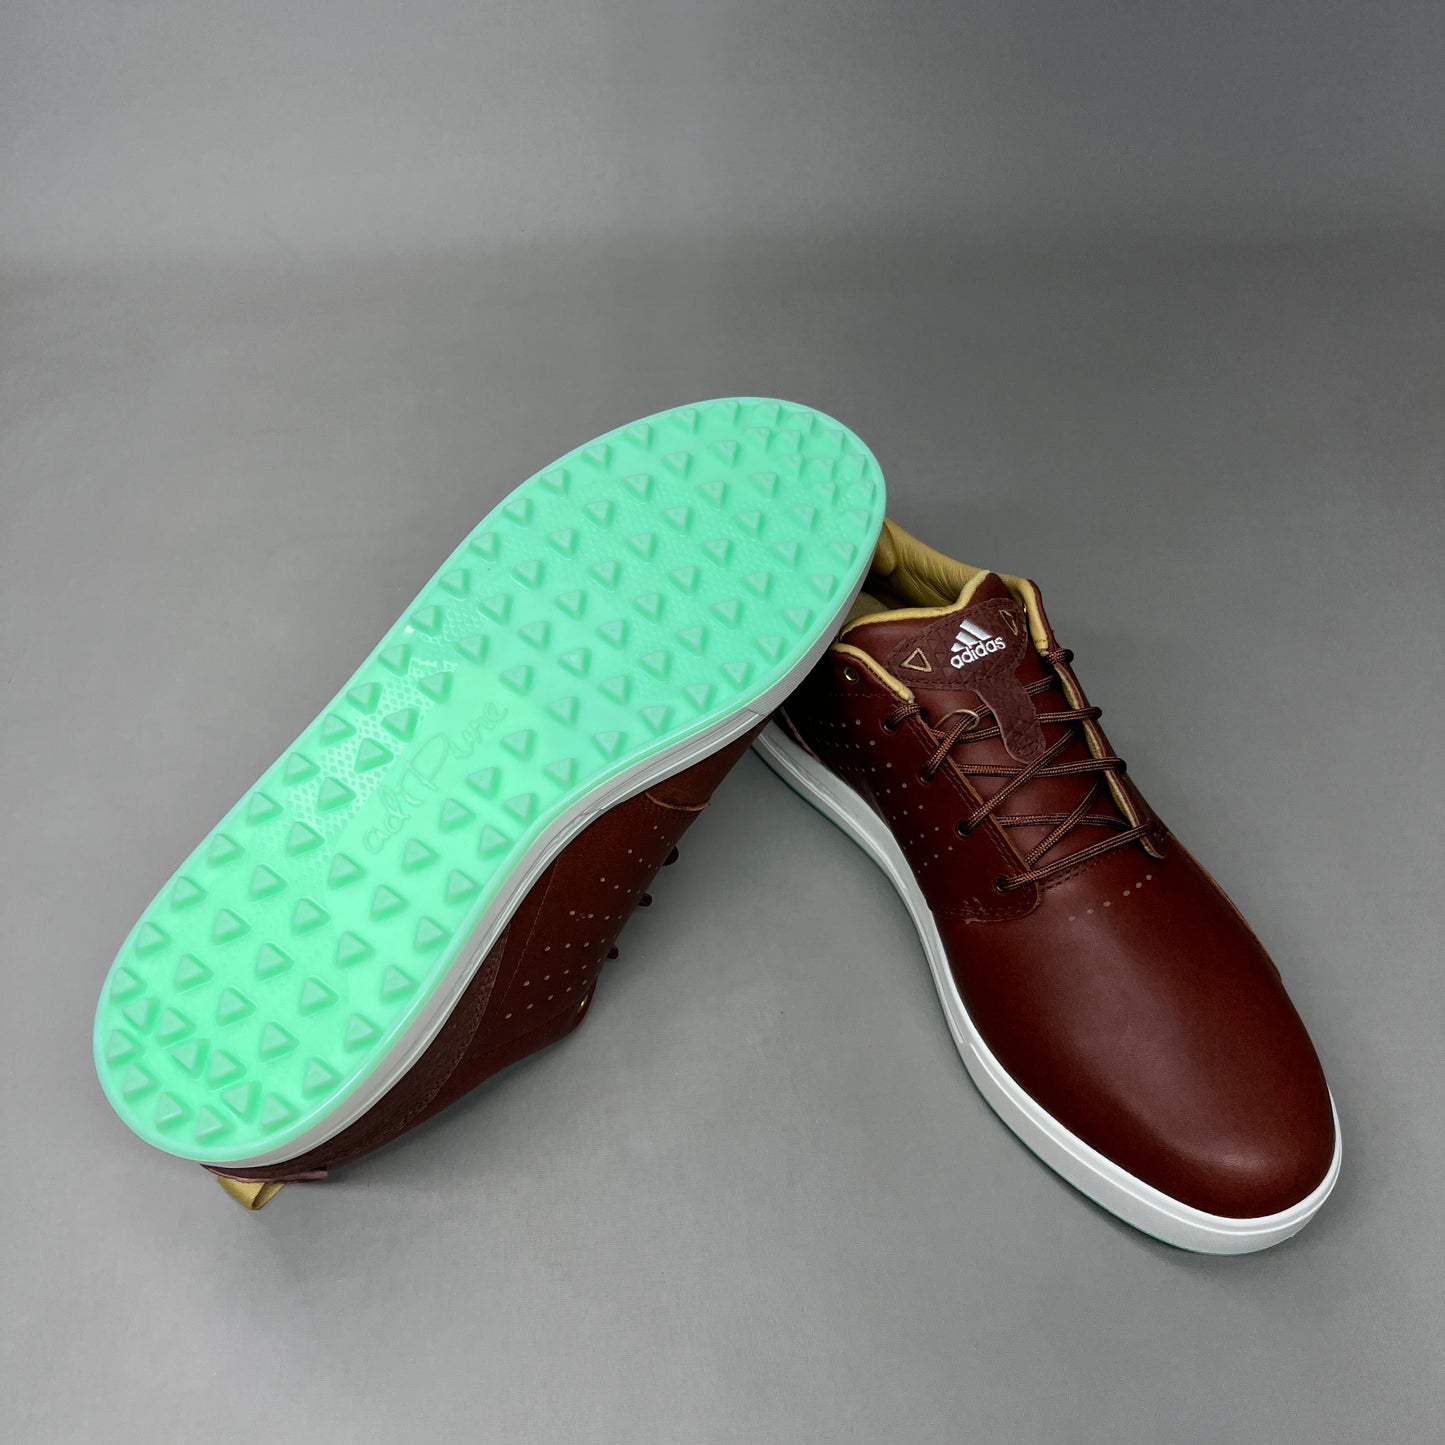 ADIDAS Golf Shoes Waterproof Flopshot Men's Sz 9 Tan / Beige / Mint GY8523 (New)